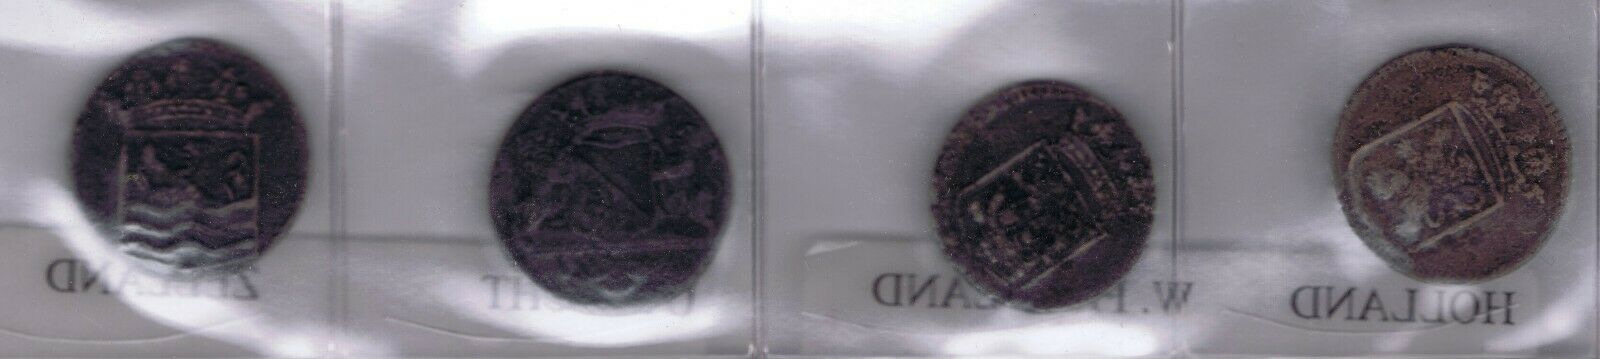 Dutch East Indies (VOC) Java 4 Duit Coins of the 1700's & Info + CoA in Folio